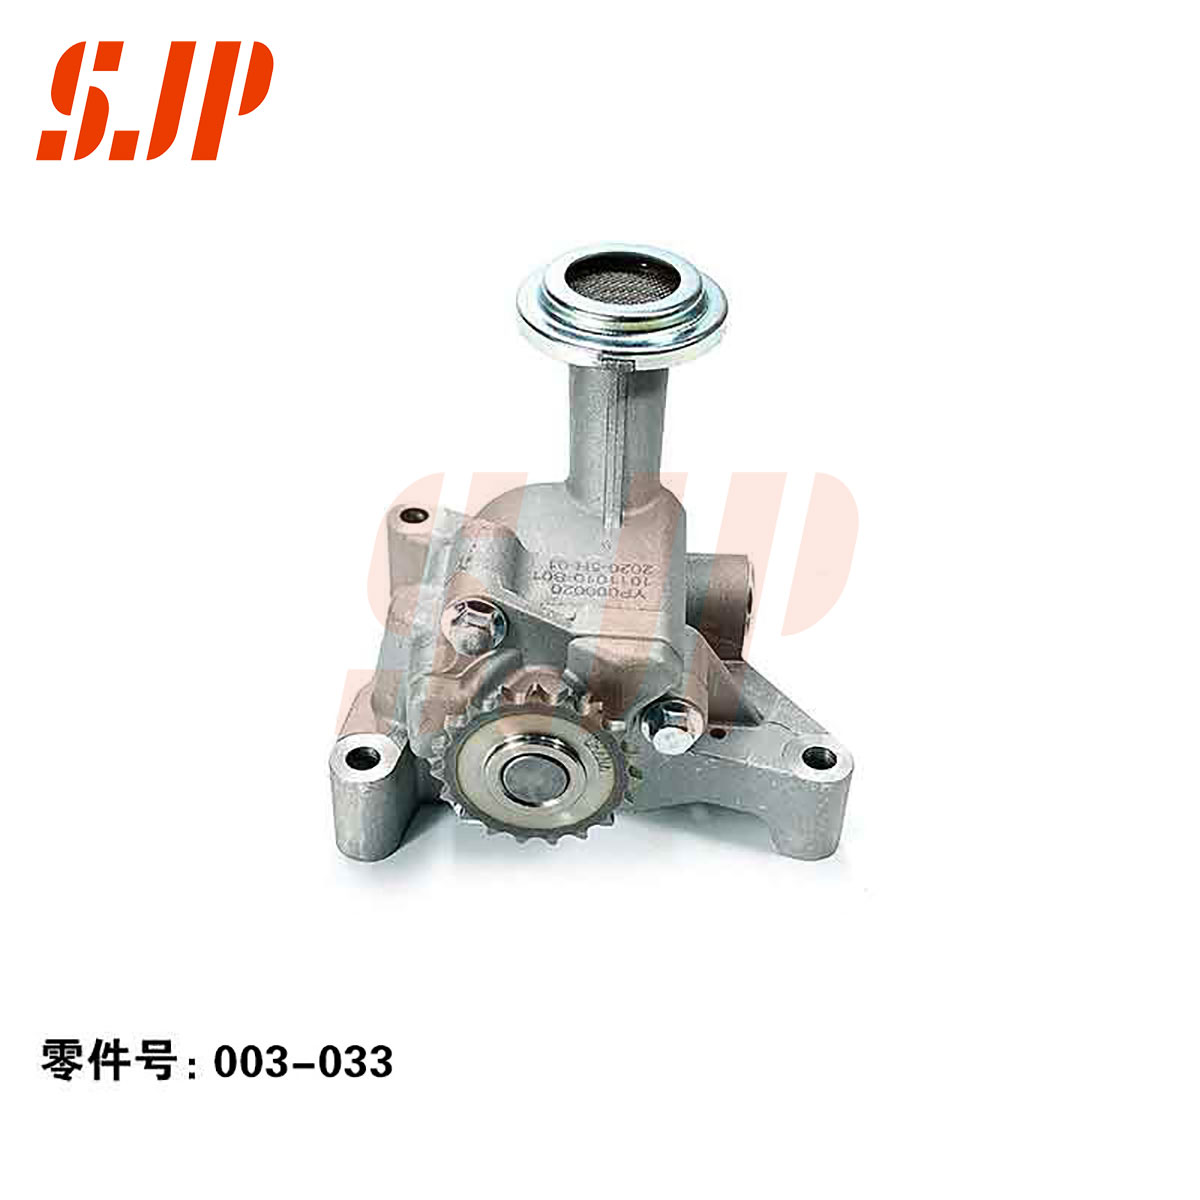 SJ-003-033 Oil Pump For Changan Auto 478/H16/B01 OLD